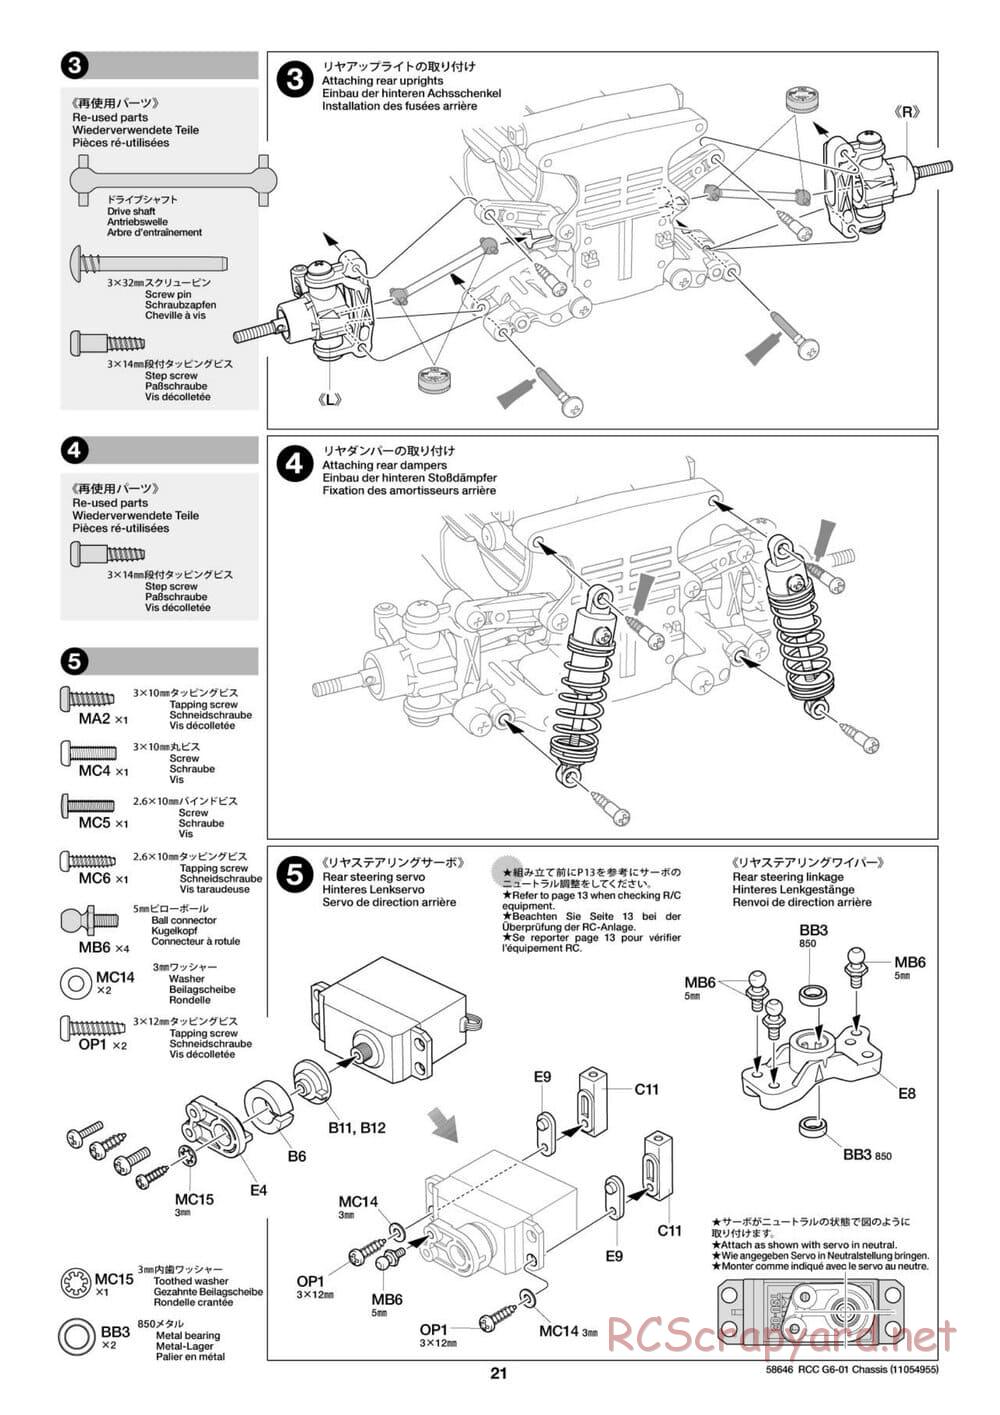 Tamiya - Konghead 6x6 - G6-01 Chassis - Manual - Page 21